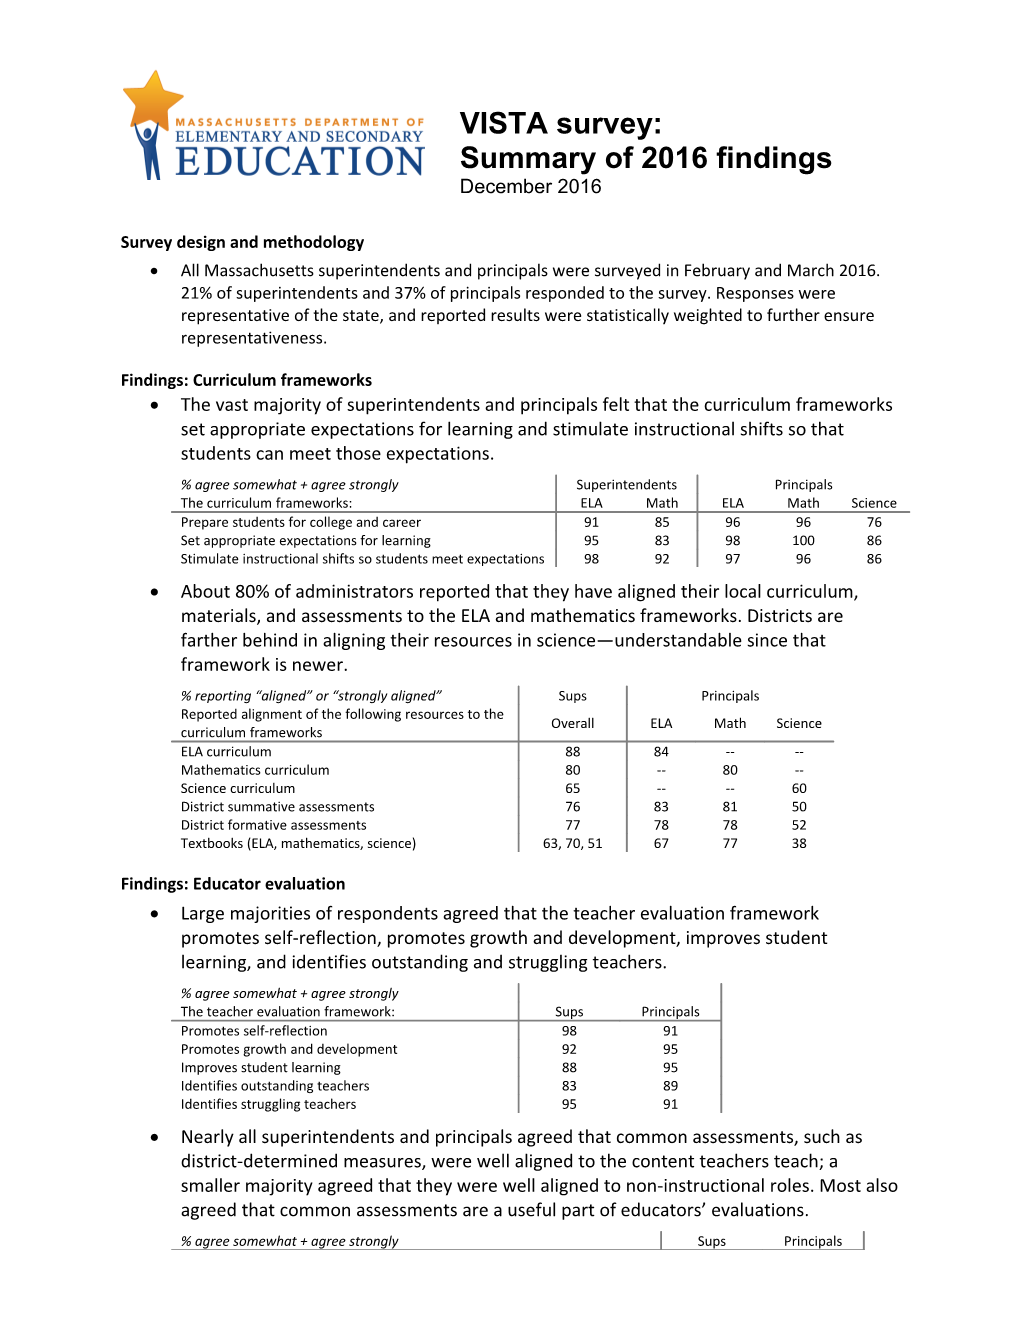 VISTA Survey: Summary of 2016 Findings